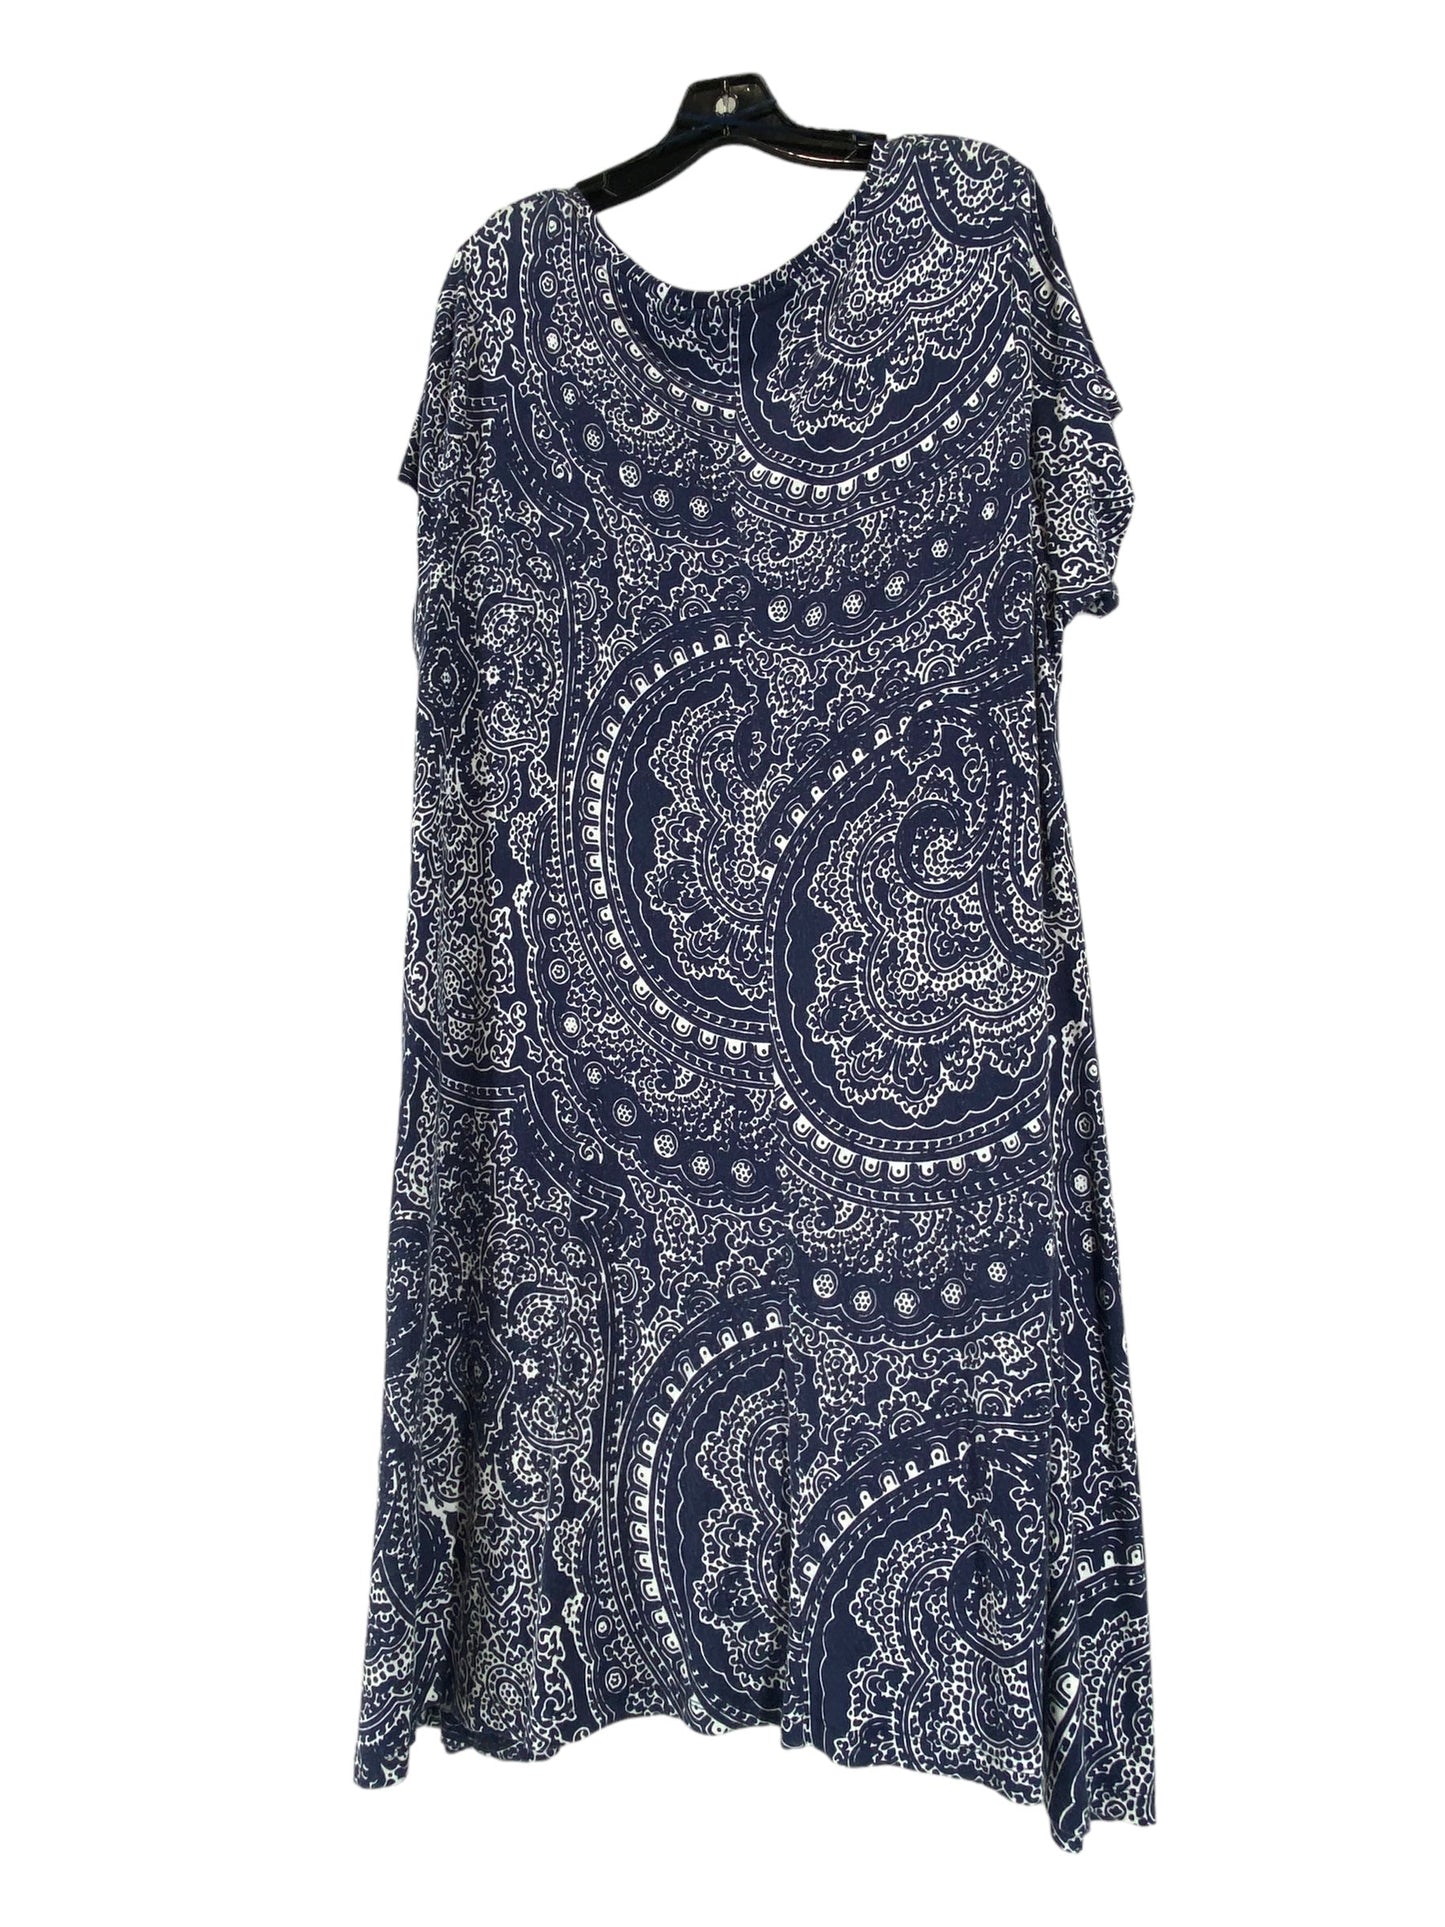 Dress Casual Midi By Cynthia Rowley  Size: 2x